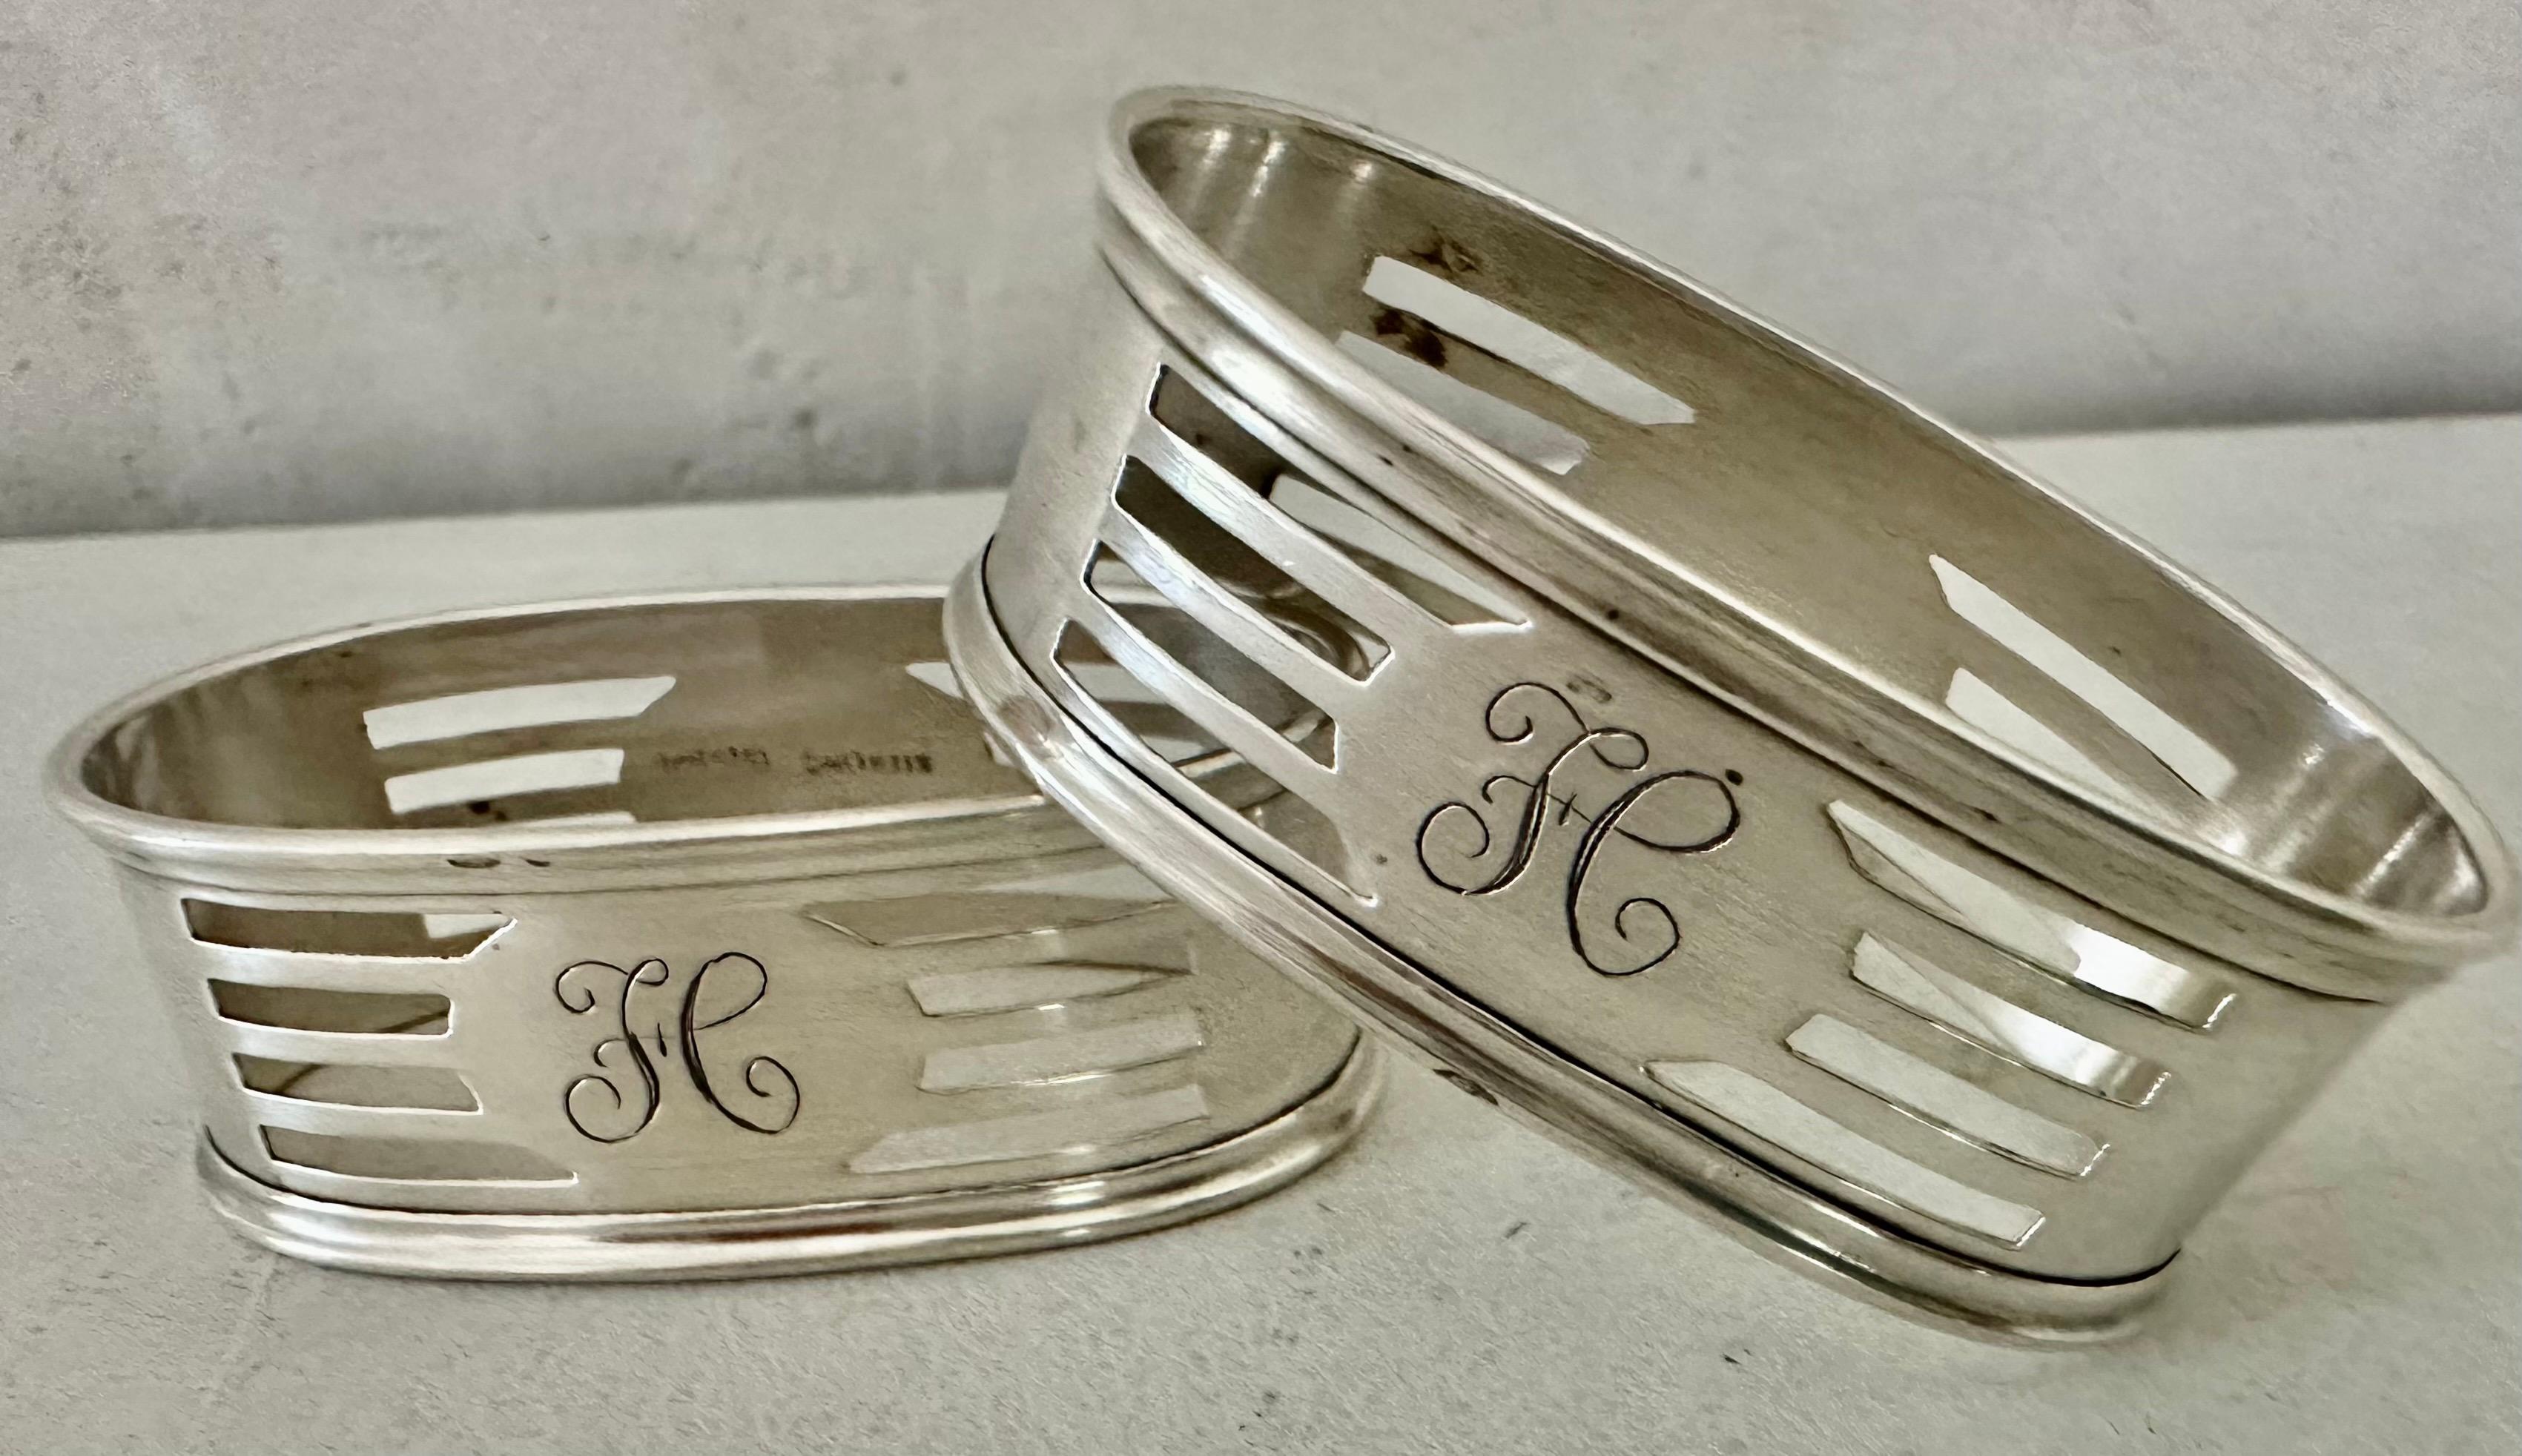 Elegant pair of oval Sterling napkin rings both stamped 